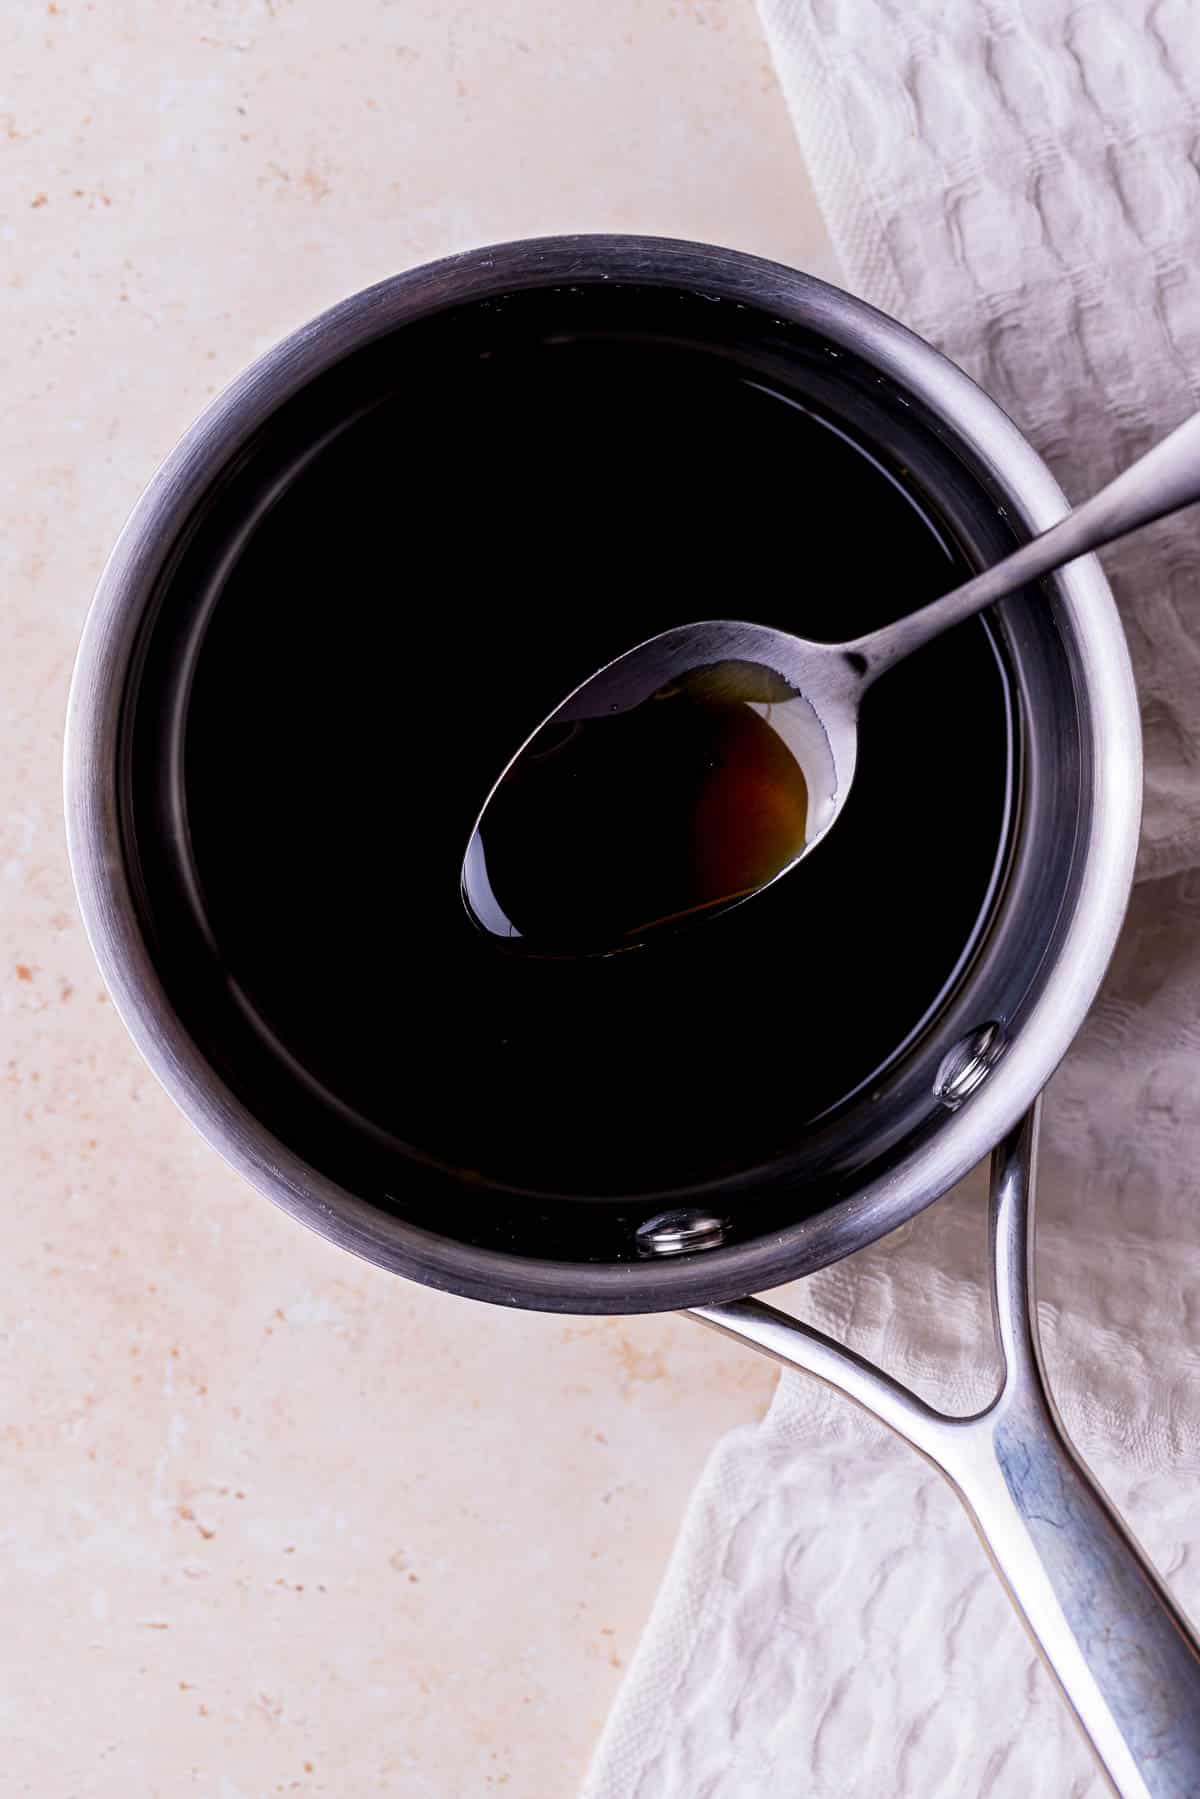 a spoon of dark sauce over top of a saucepan